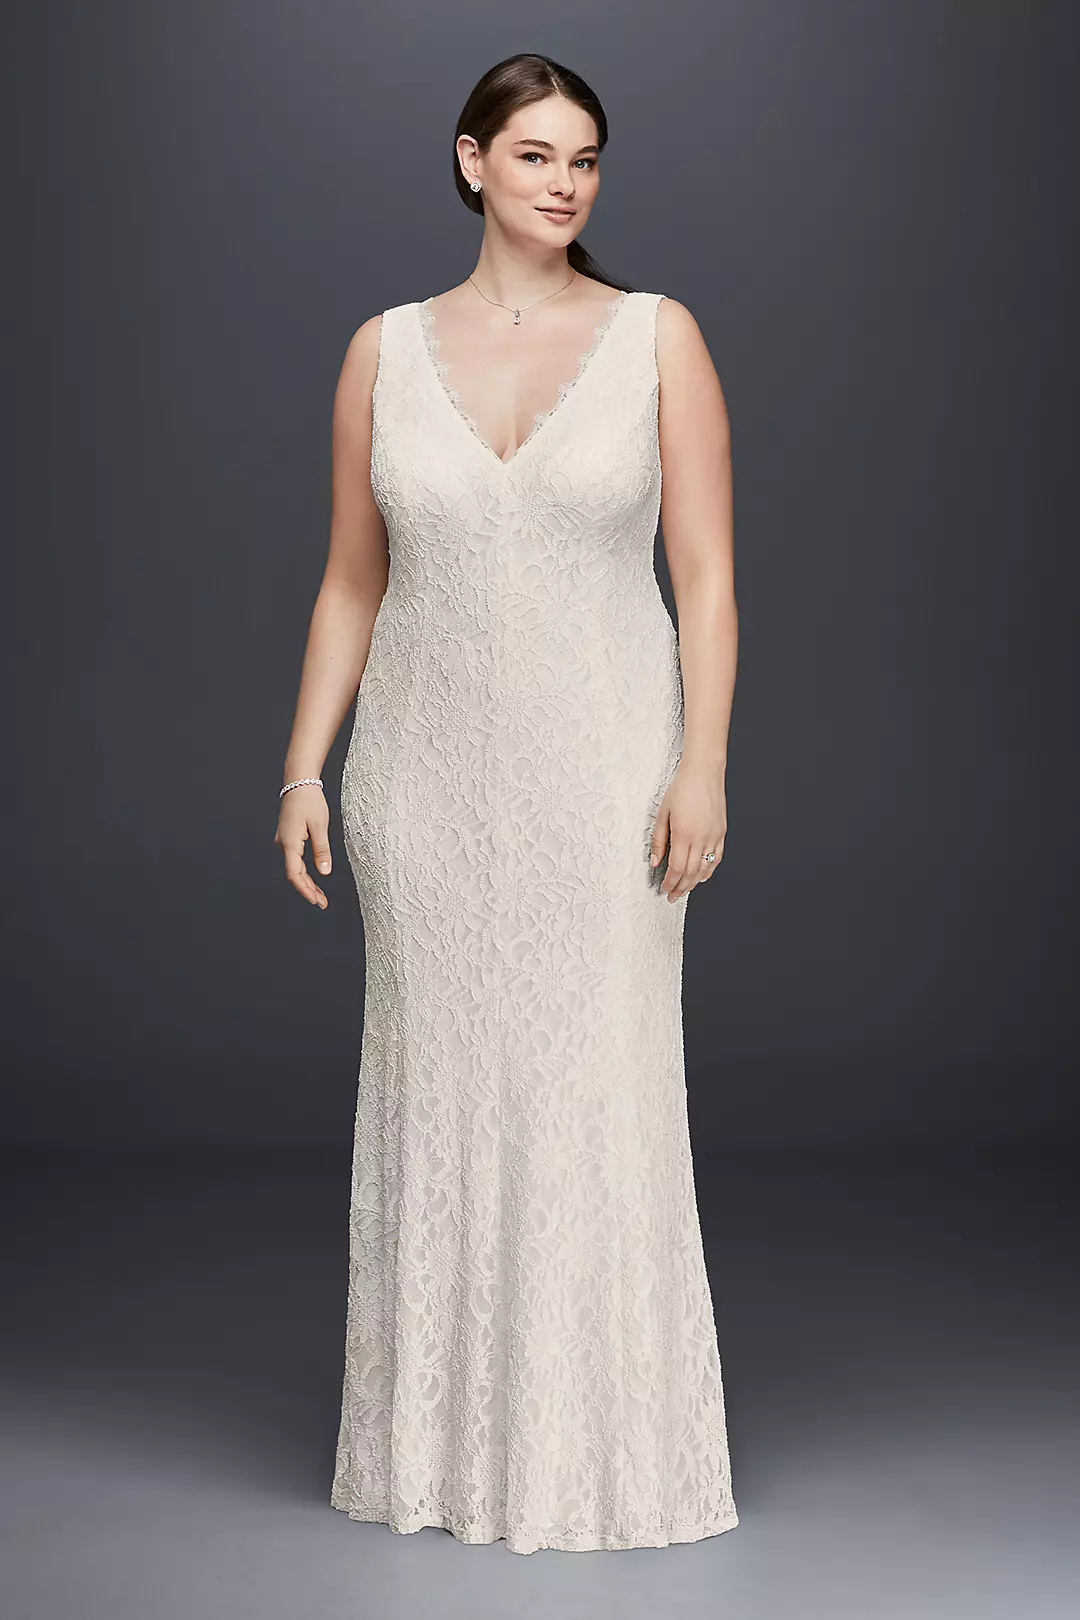 Allover Lace V-Neck Sheath Wedding Dress Image